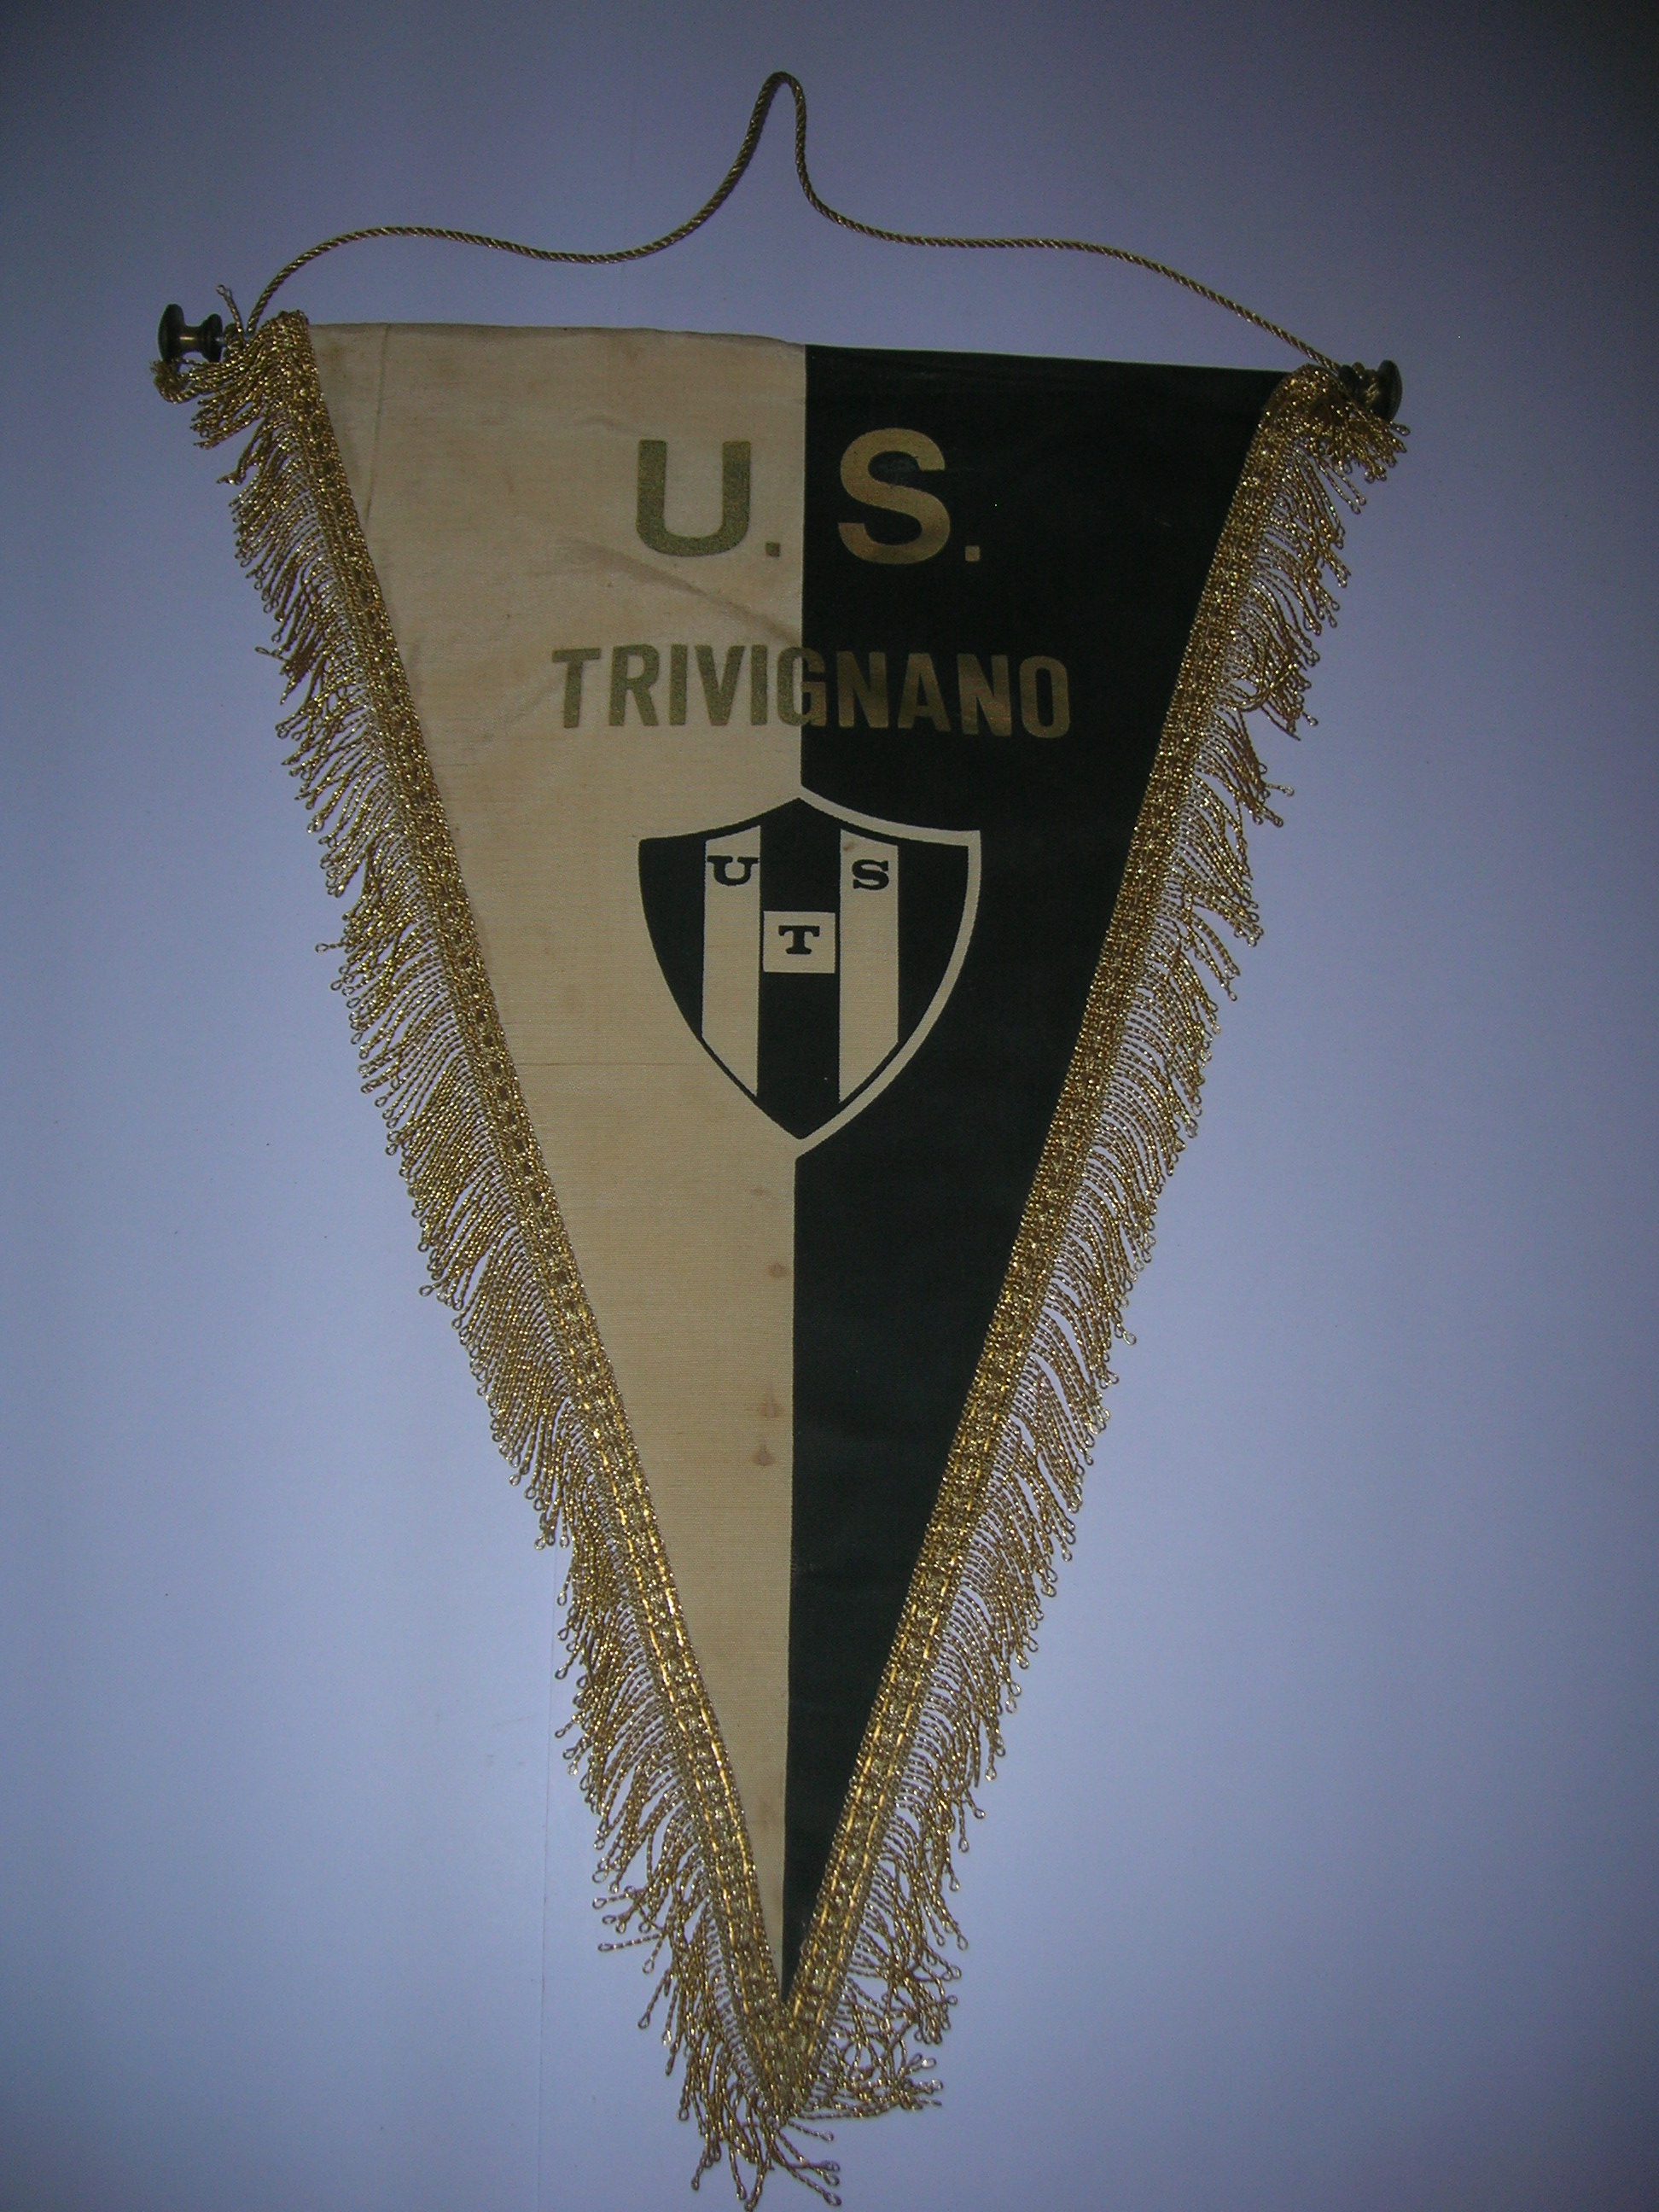 U S.  Trivignano  D94